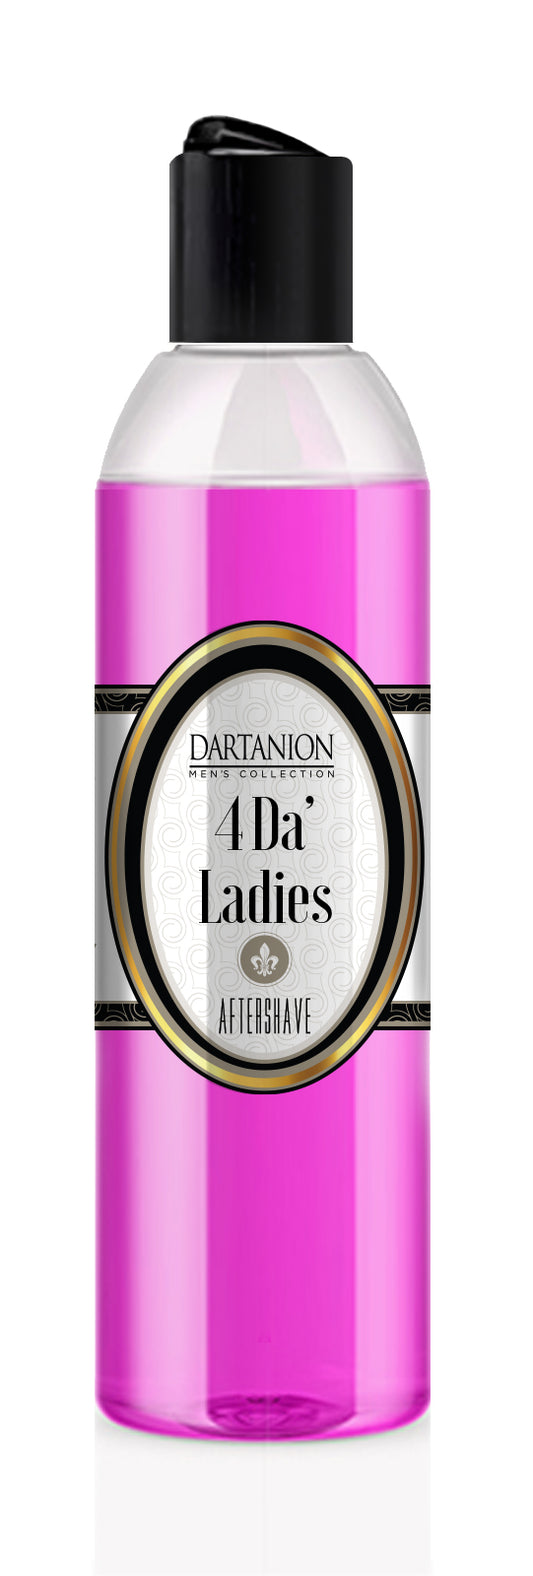 Dartanion Men’s Collection “4Da’ Ladies” aftershave